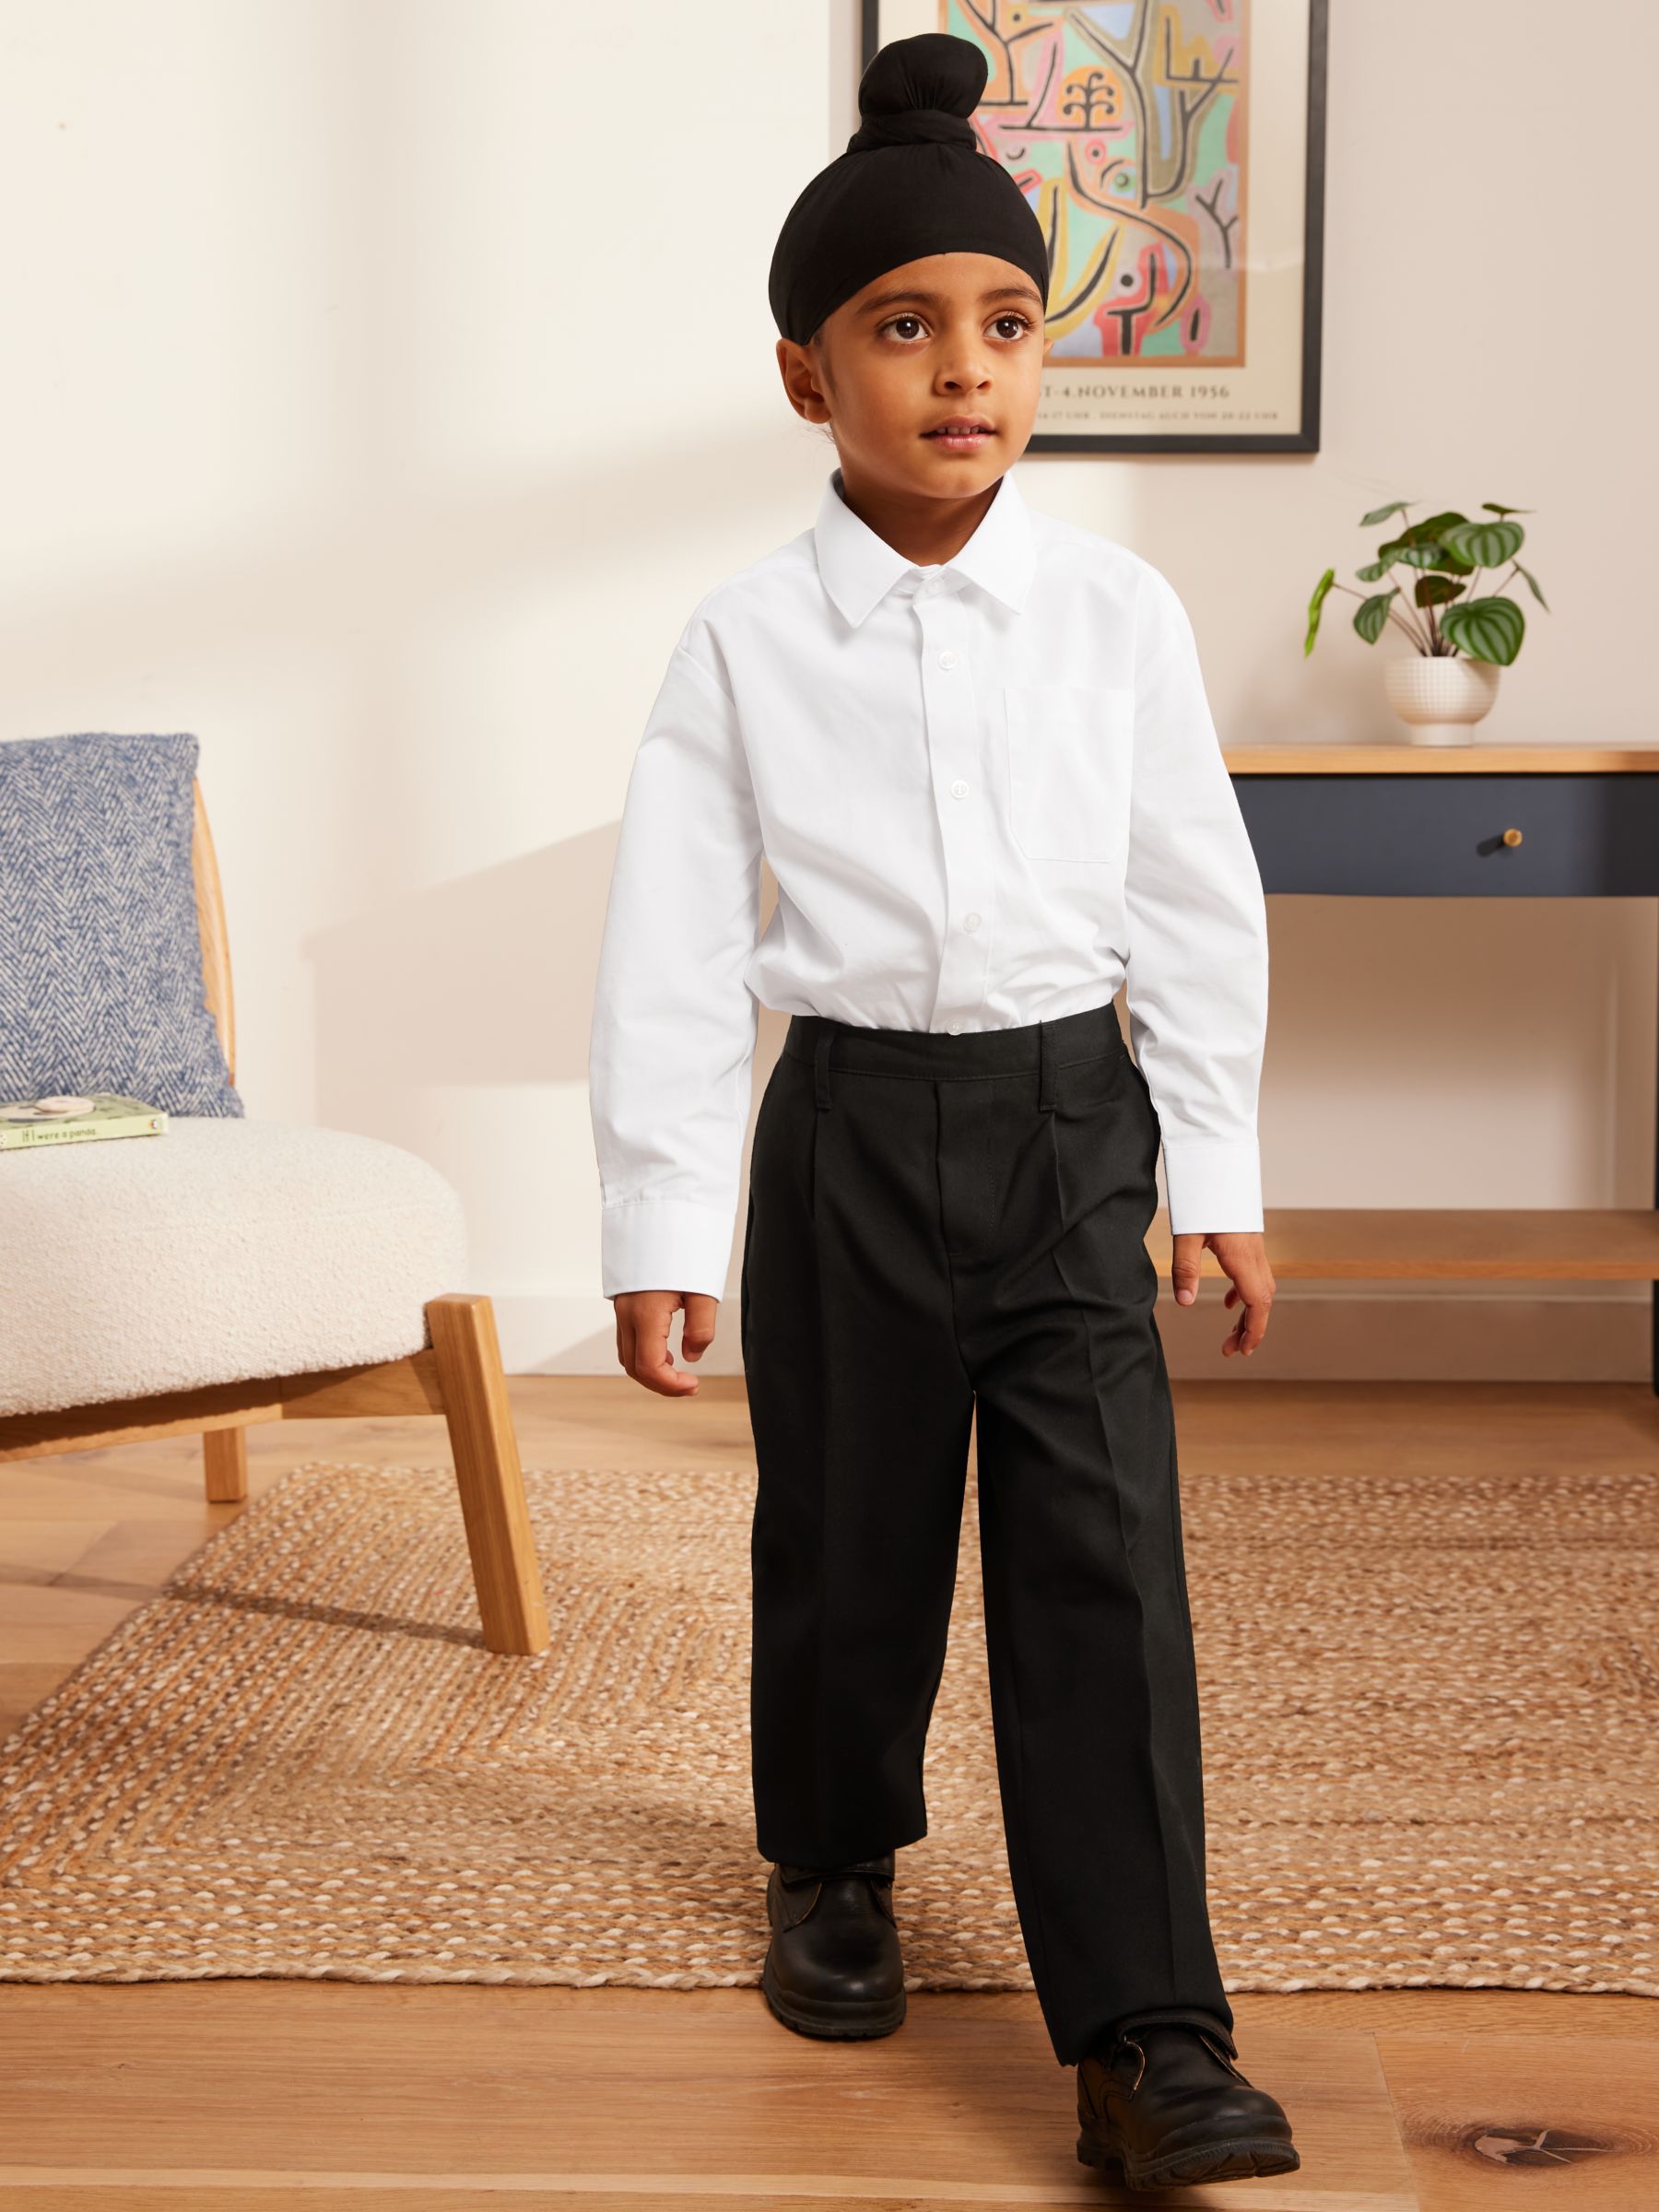 Buy John Lewis ANYDAY Adjustable Waist Boys' School Trousers, Pack of 2 Online at johnlewis.com